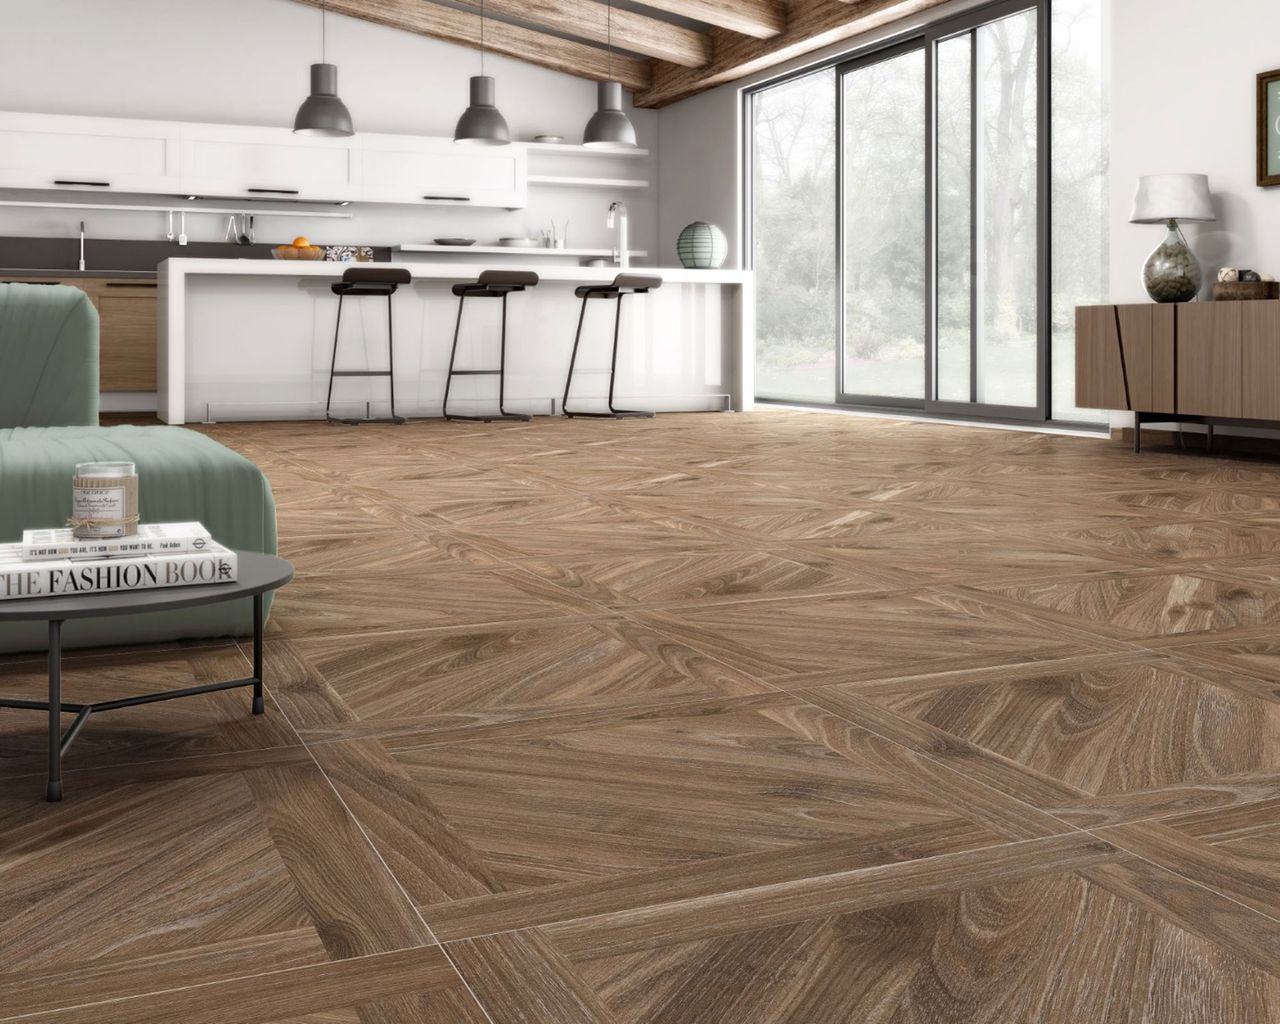 13 kitchen flooring ideas Stylish tiles, vinyl & wood Real Homes